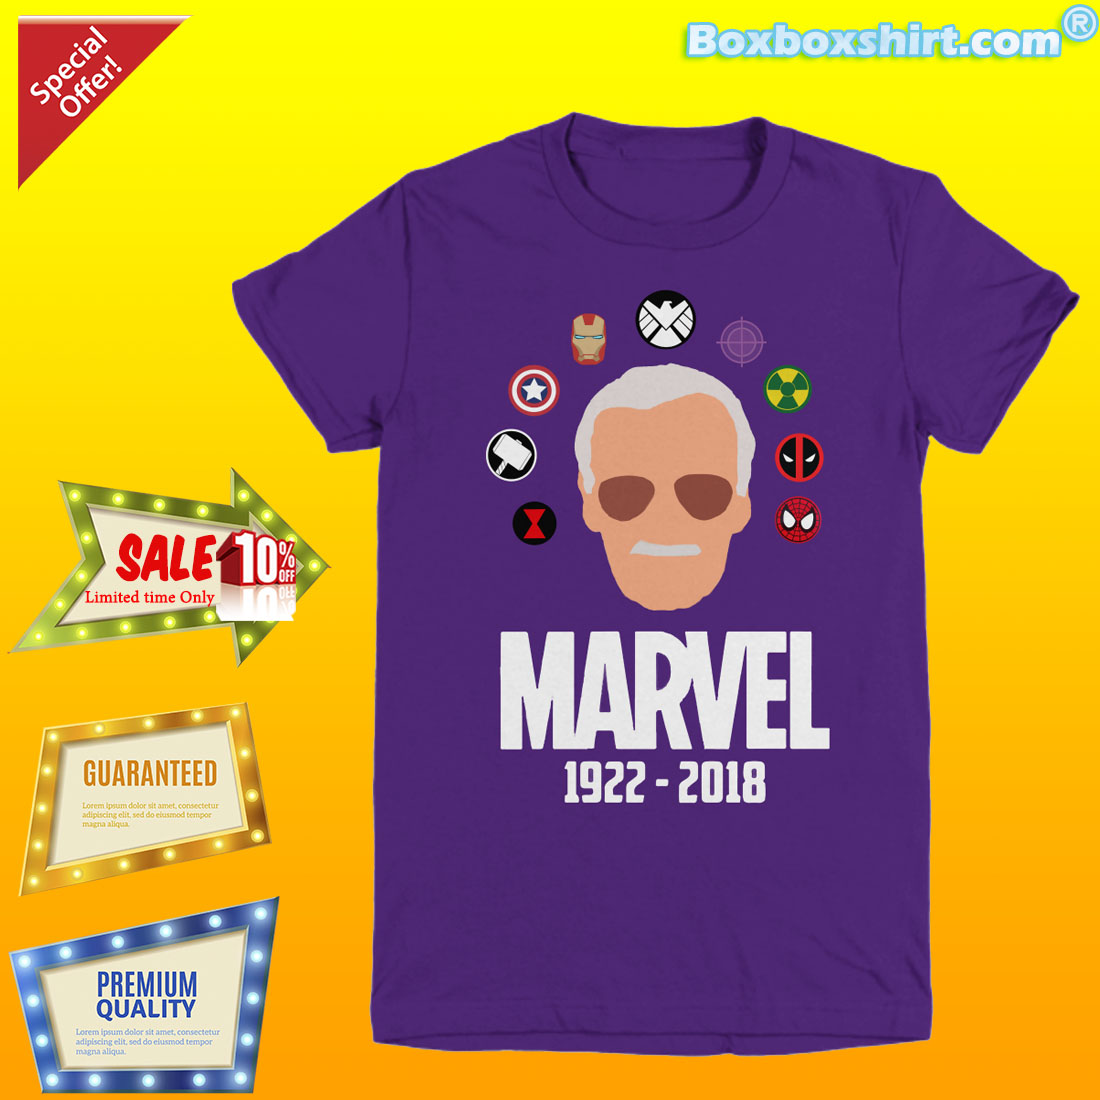 Marvel Stan Lee shirt